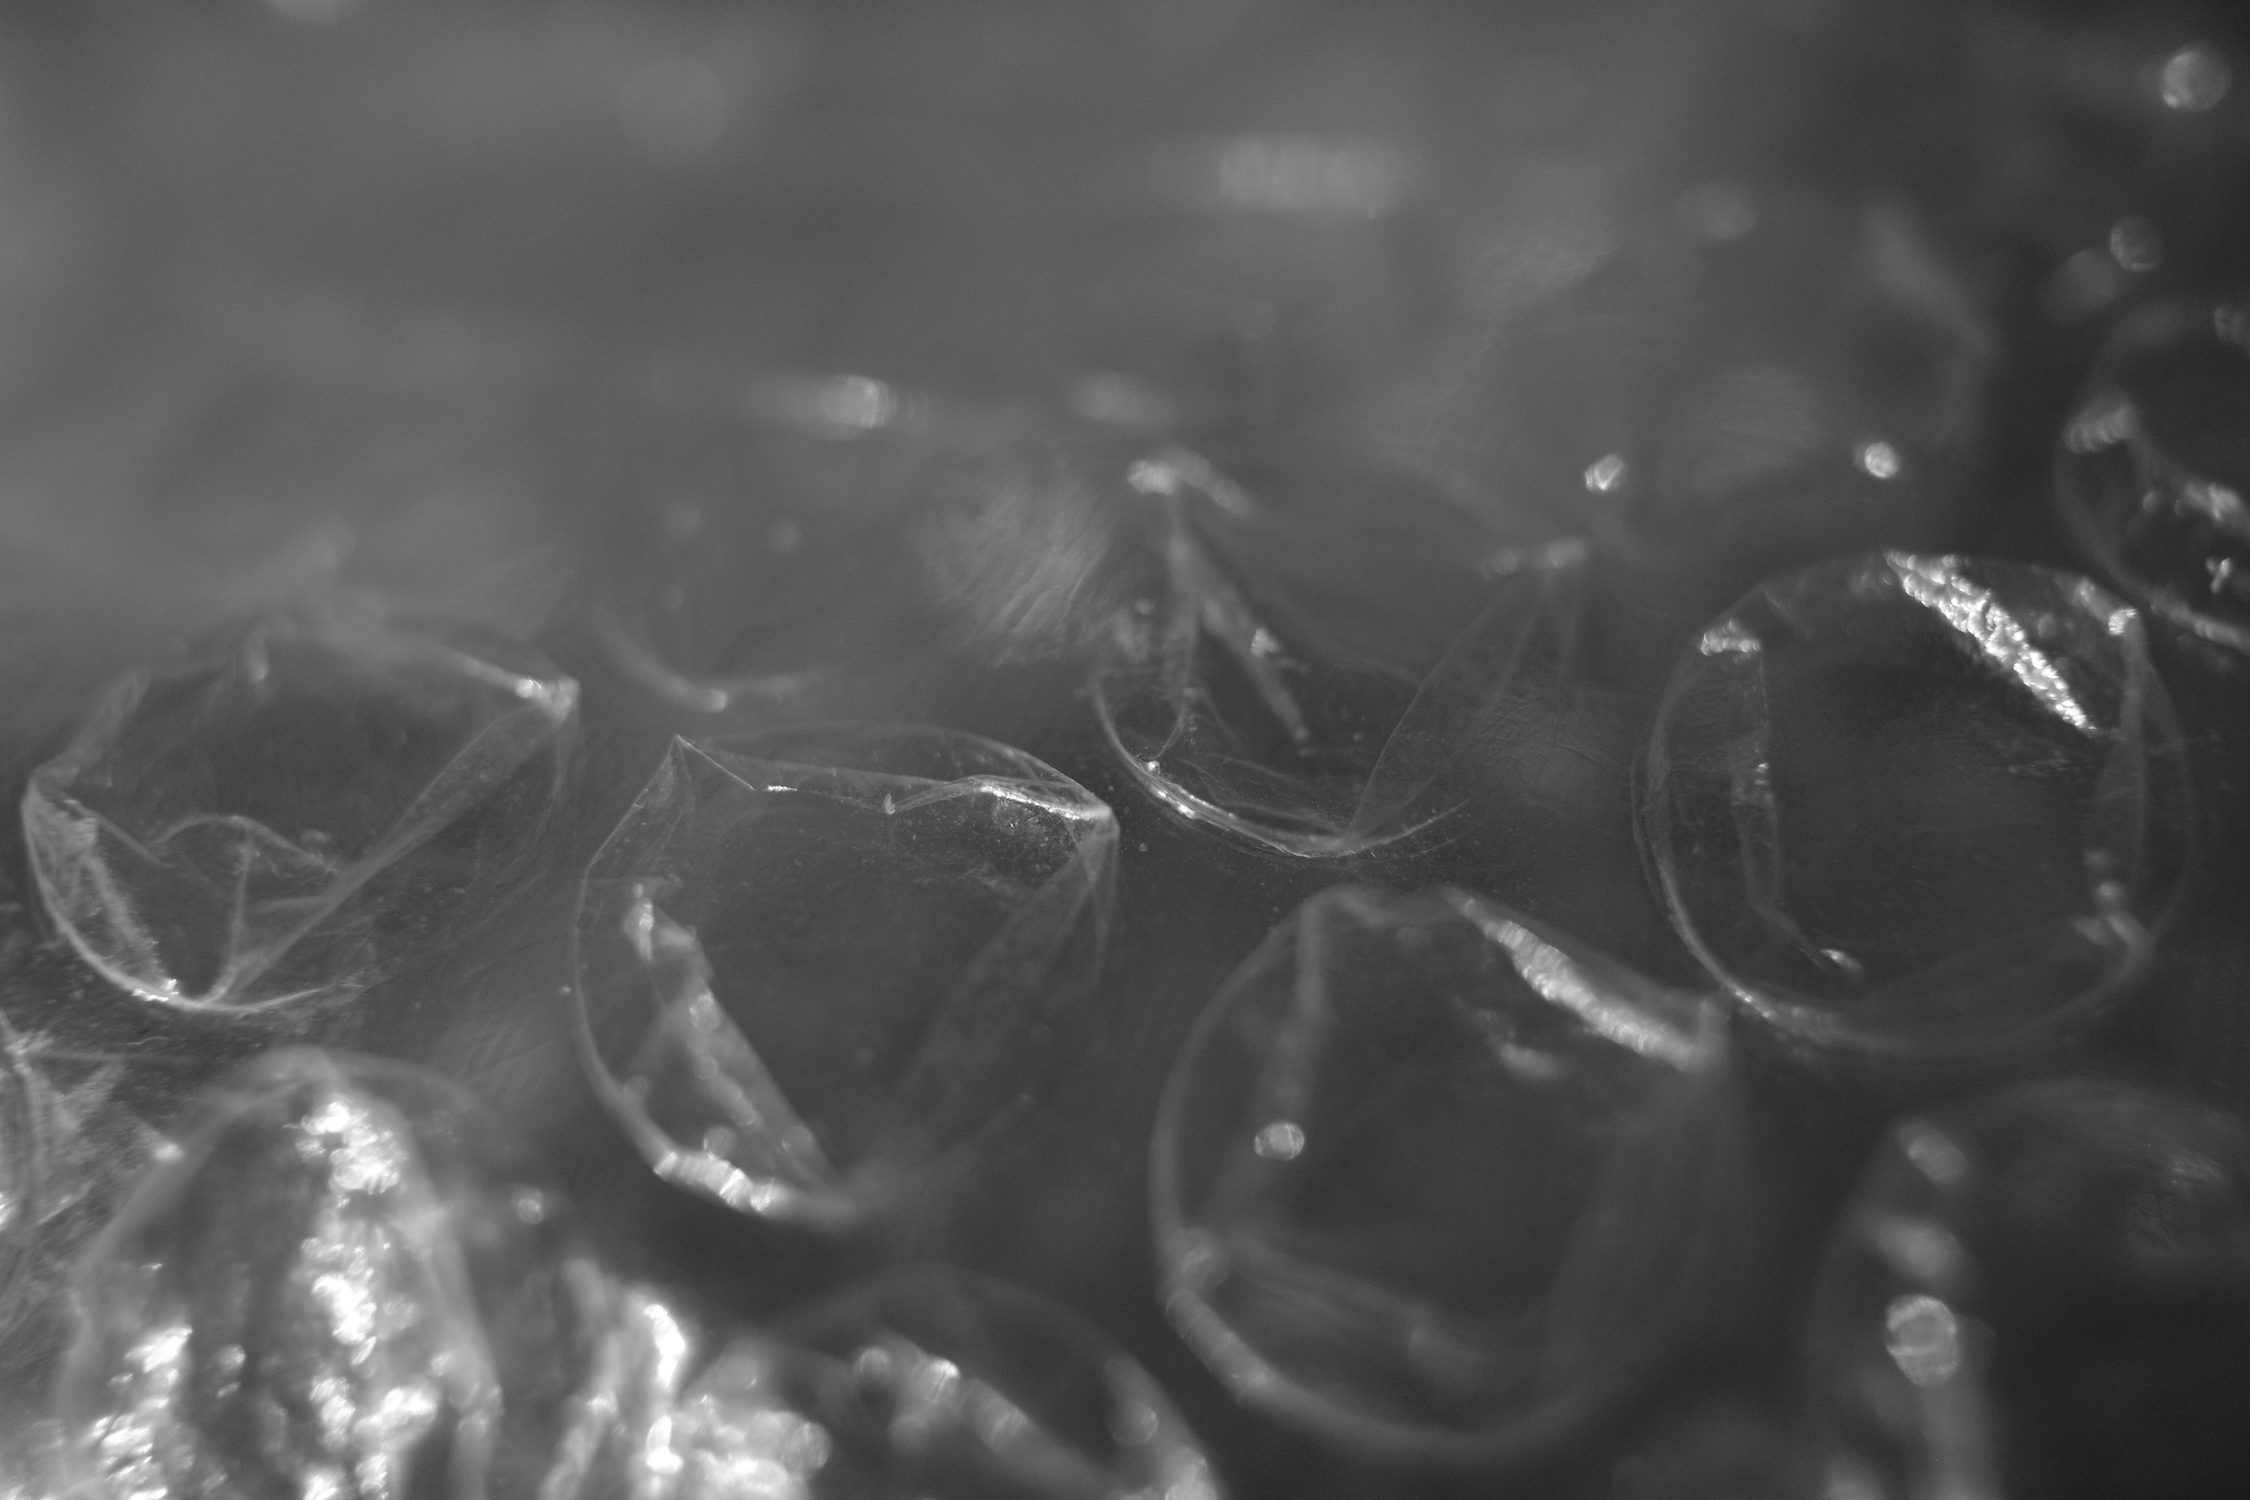 Bubble wrap close-up, black-and-white photo.